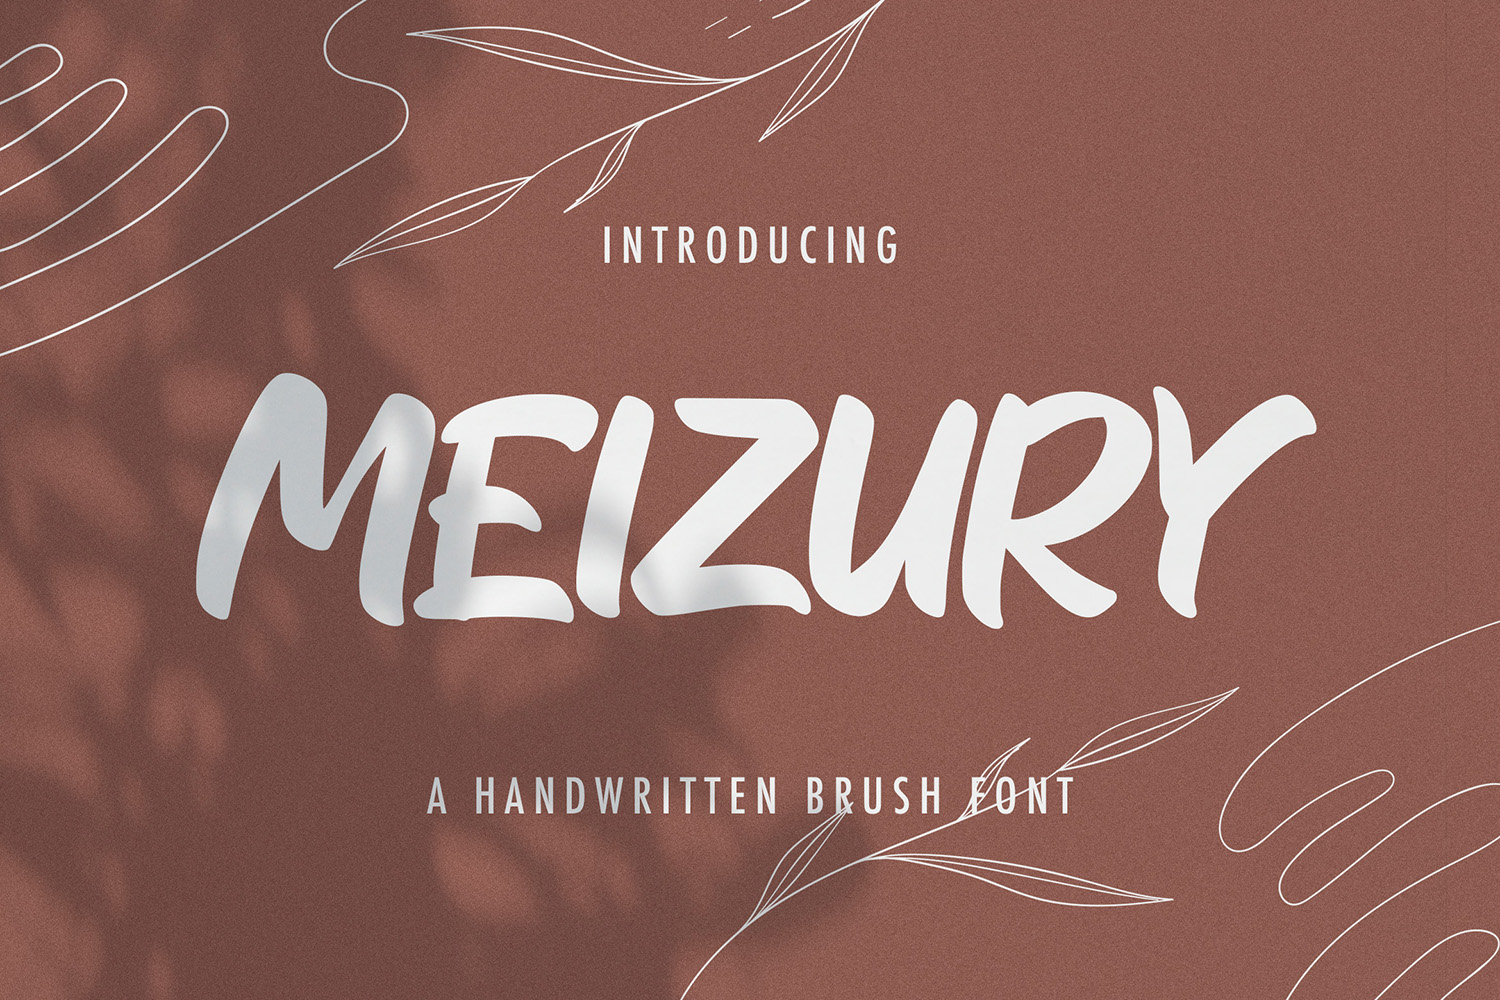 Meizury Free Font